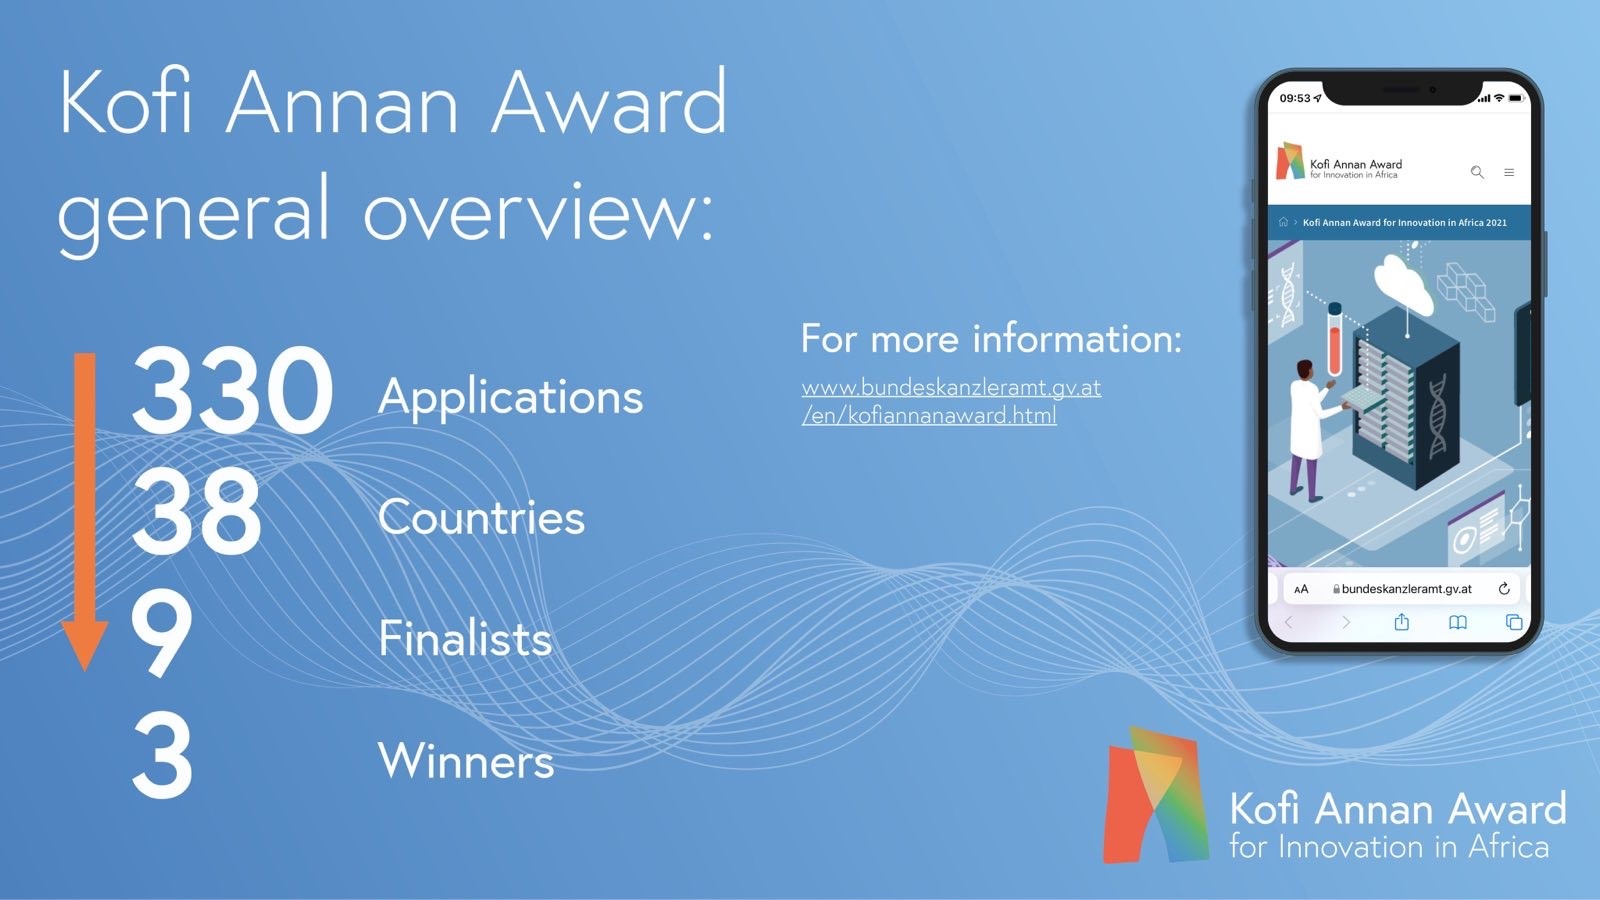 Kofi Annan Award - General overview: 330 applications, 38 countries, 9 finalists, 3 winners